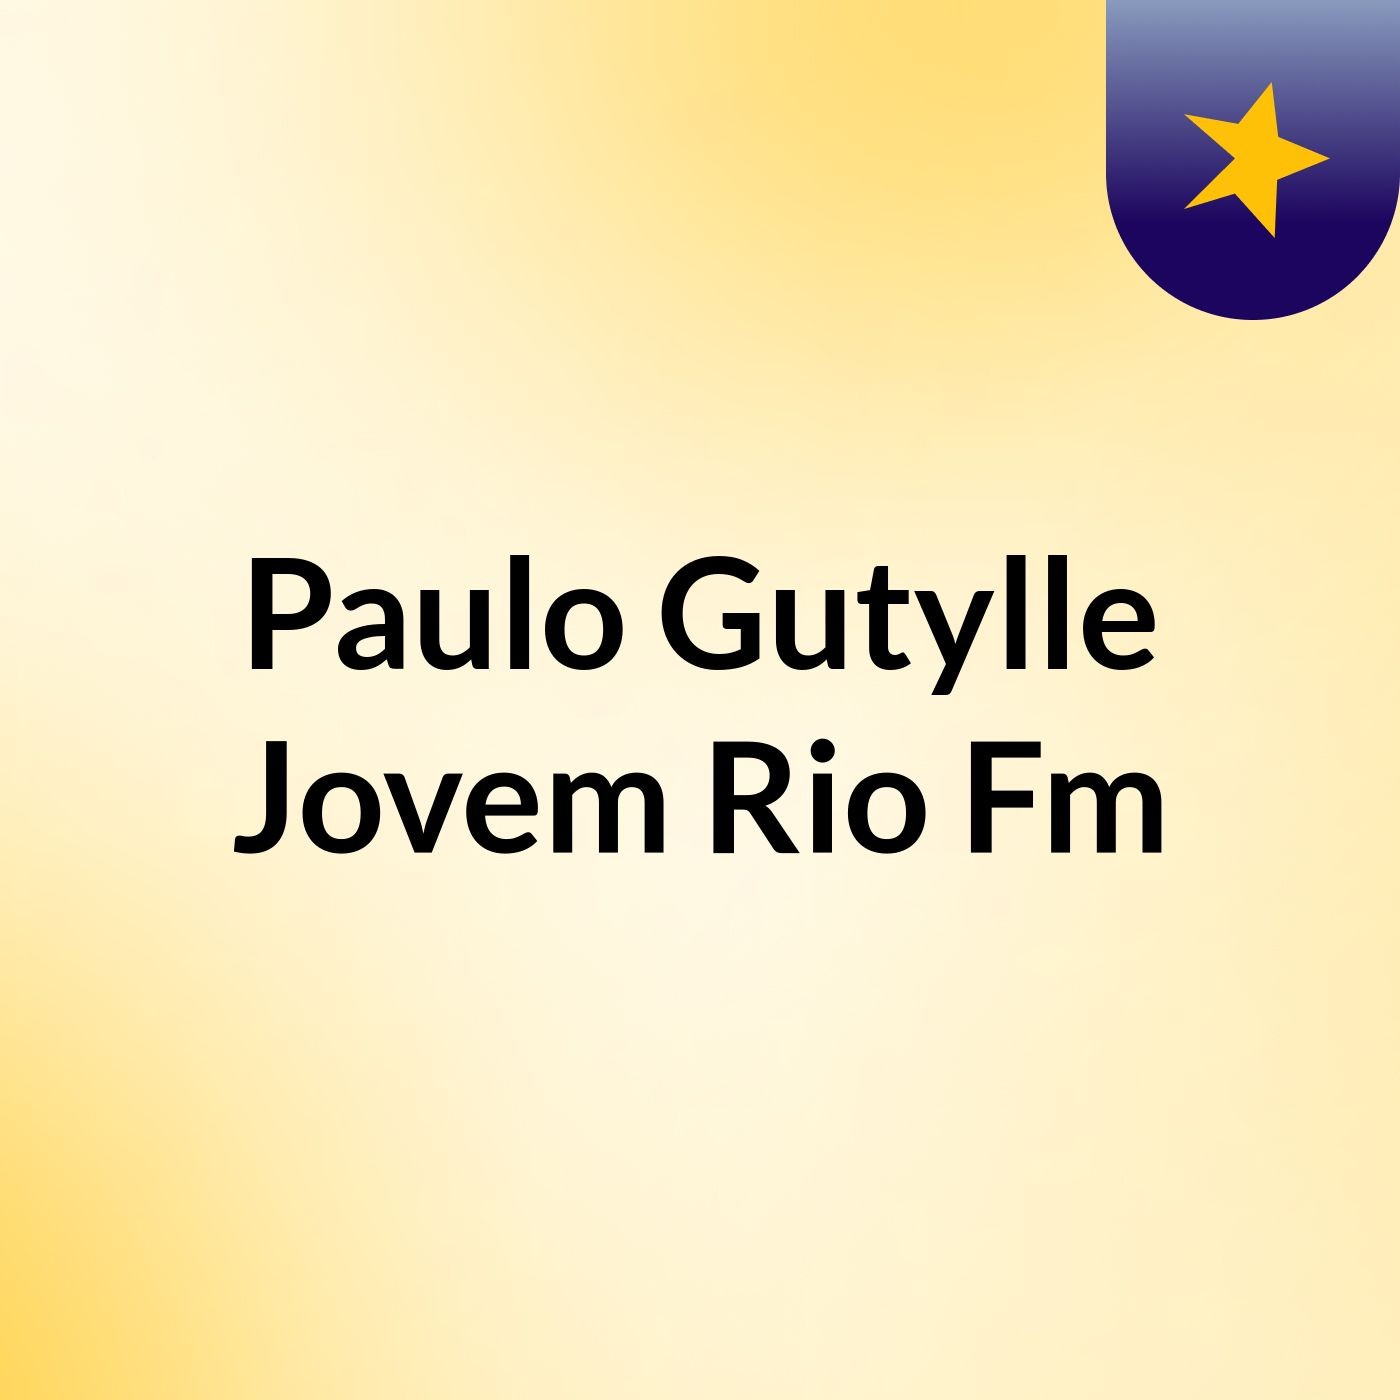 Paulo Gutylle' Jovem Rio Fm